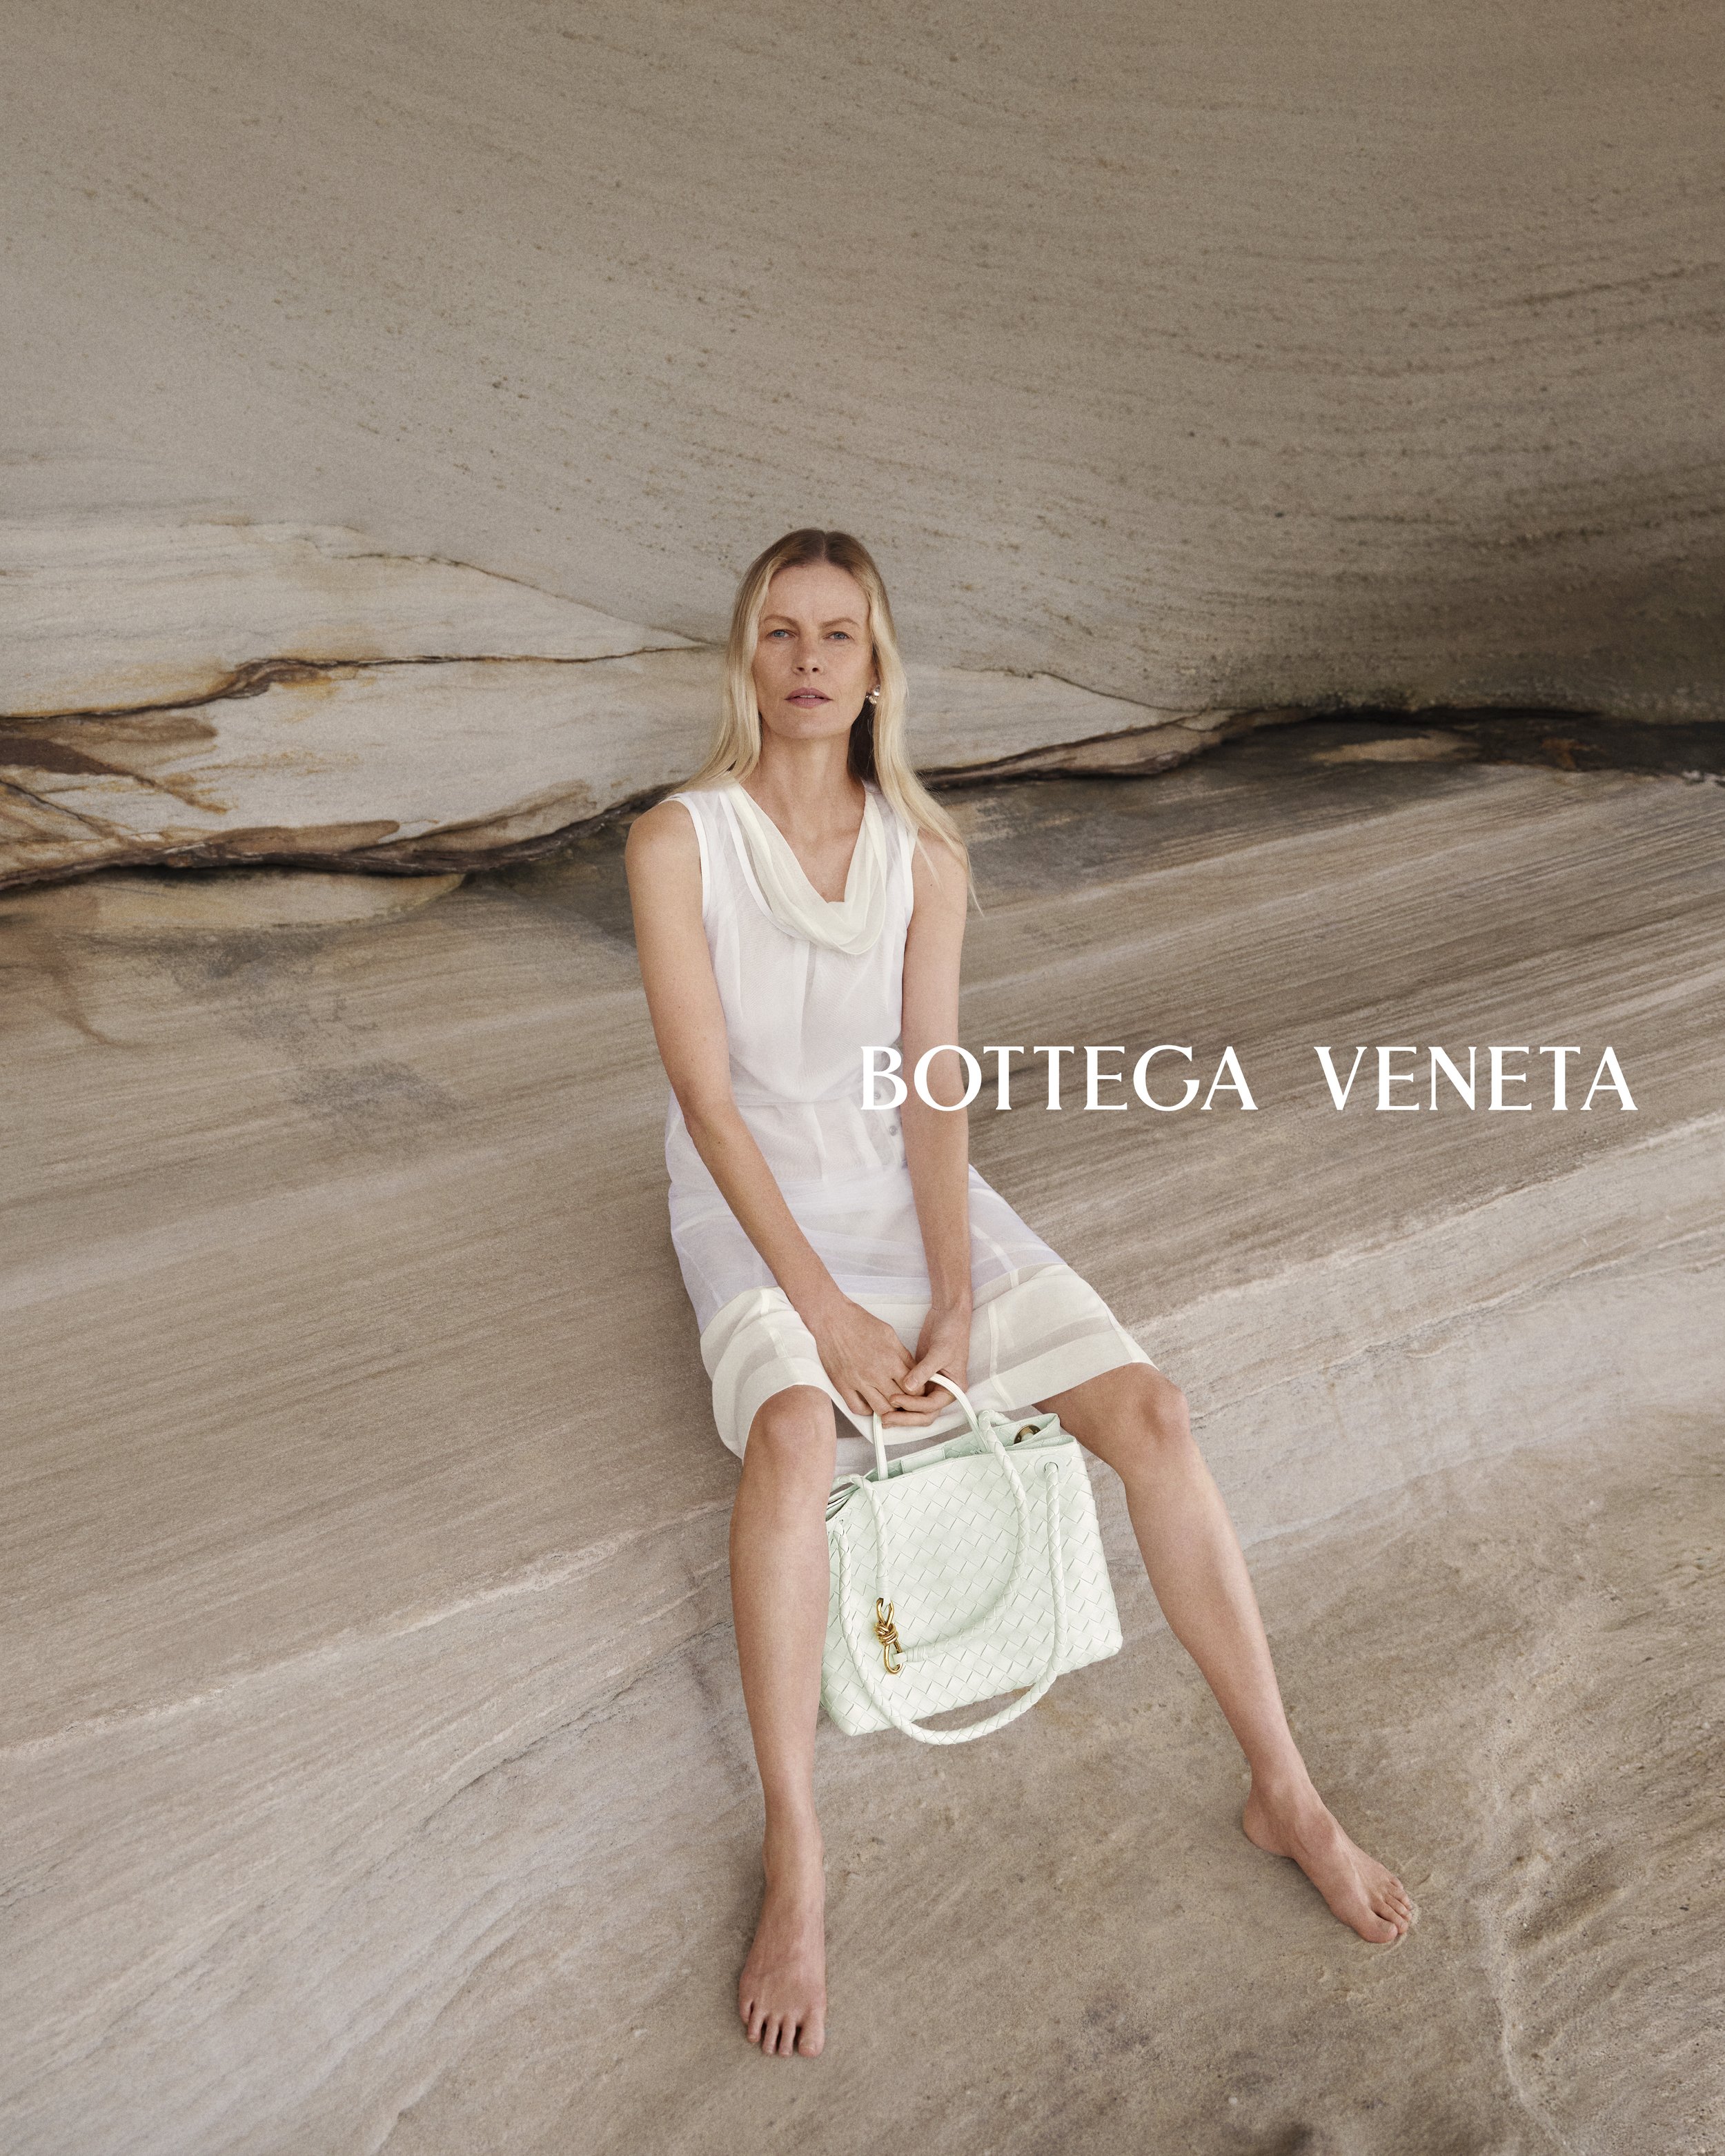 Bottega Veneta introduces the new Andiamo bag